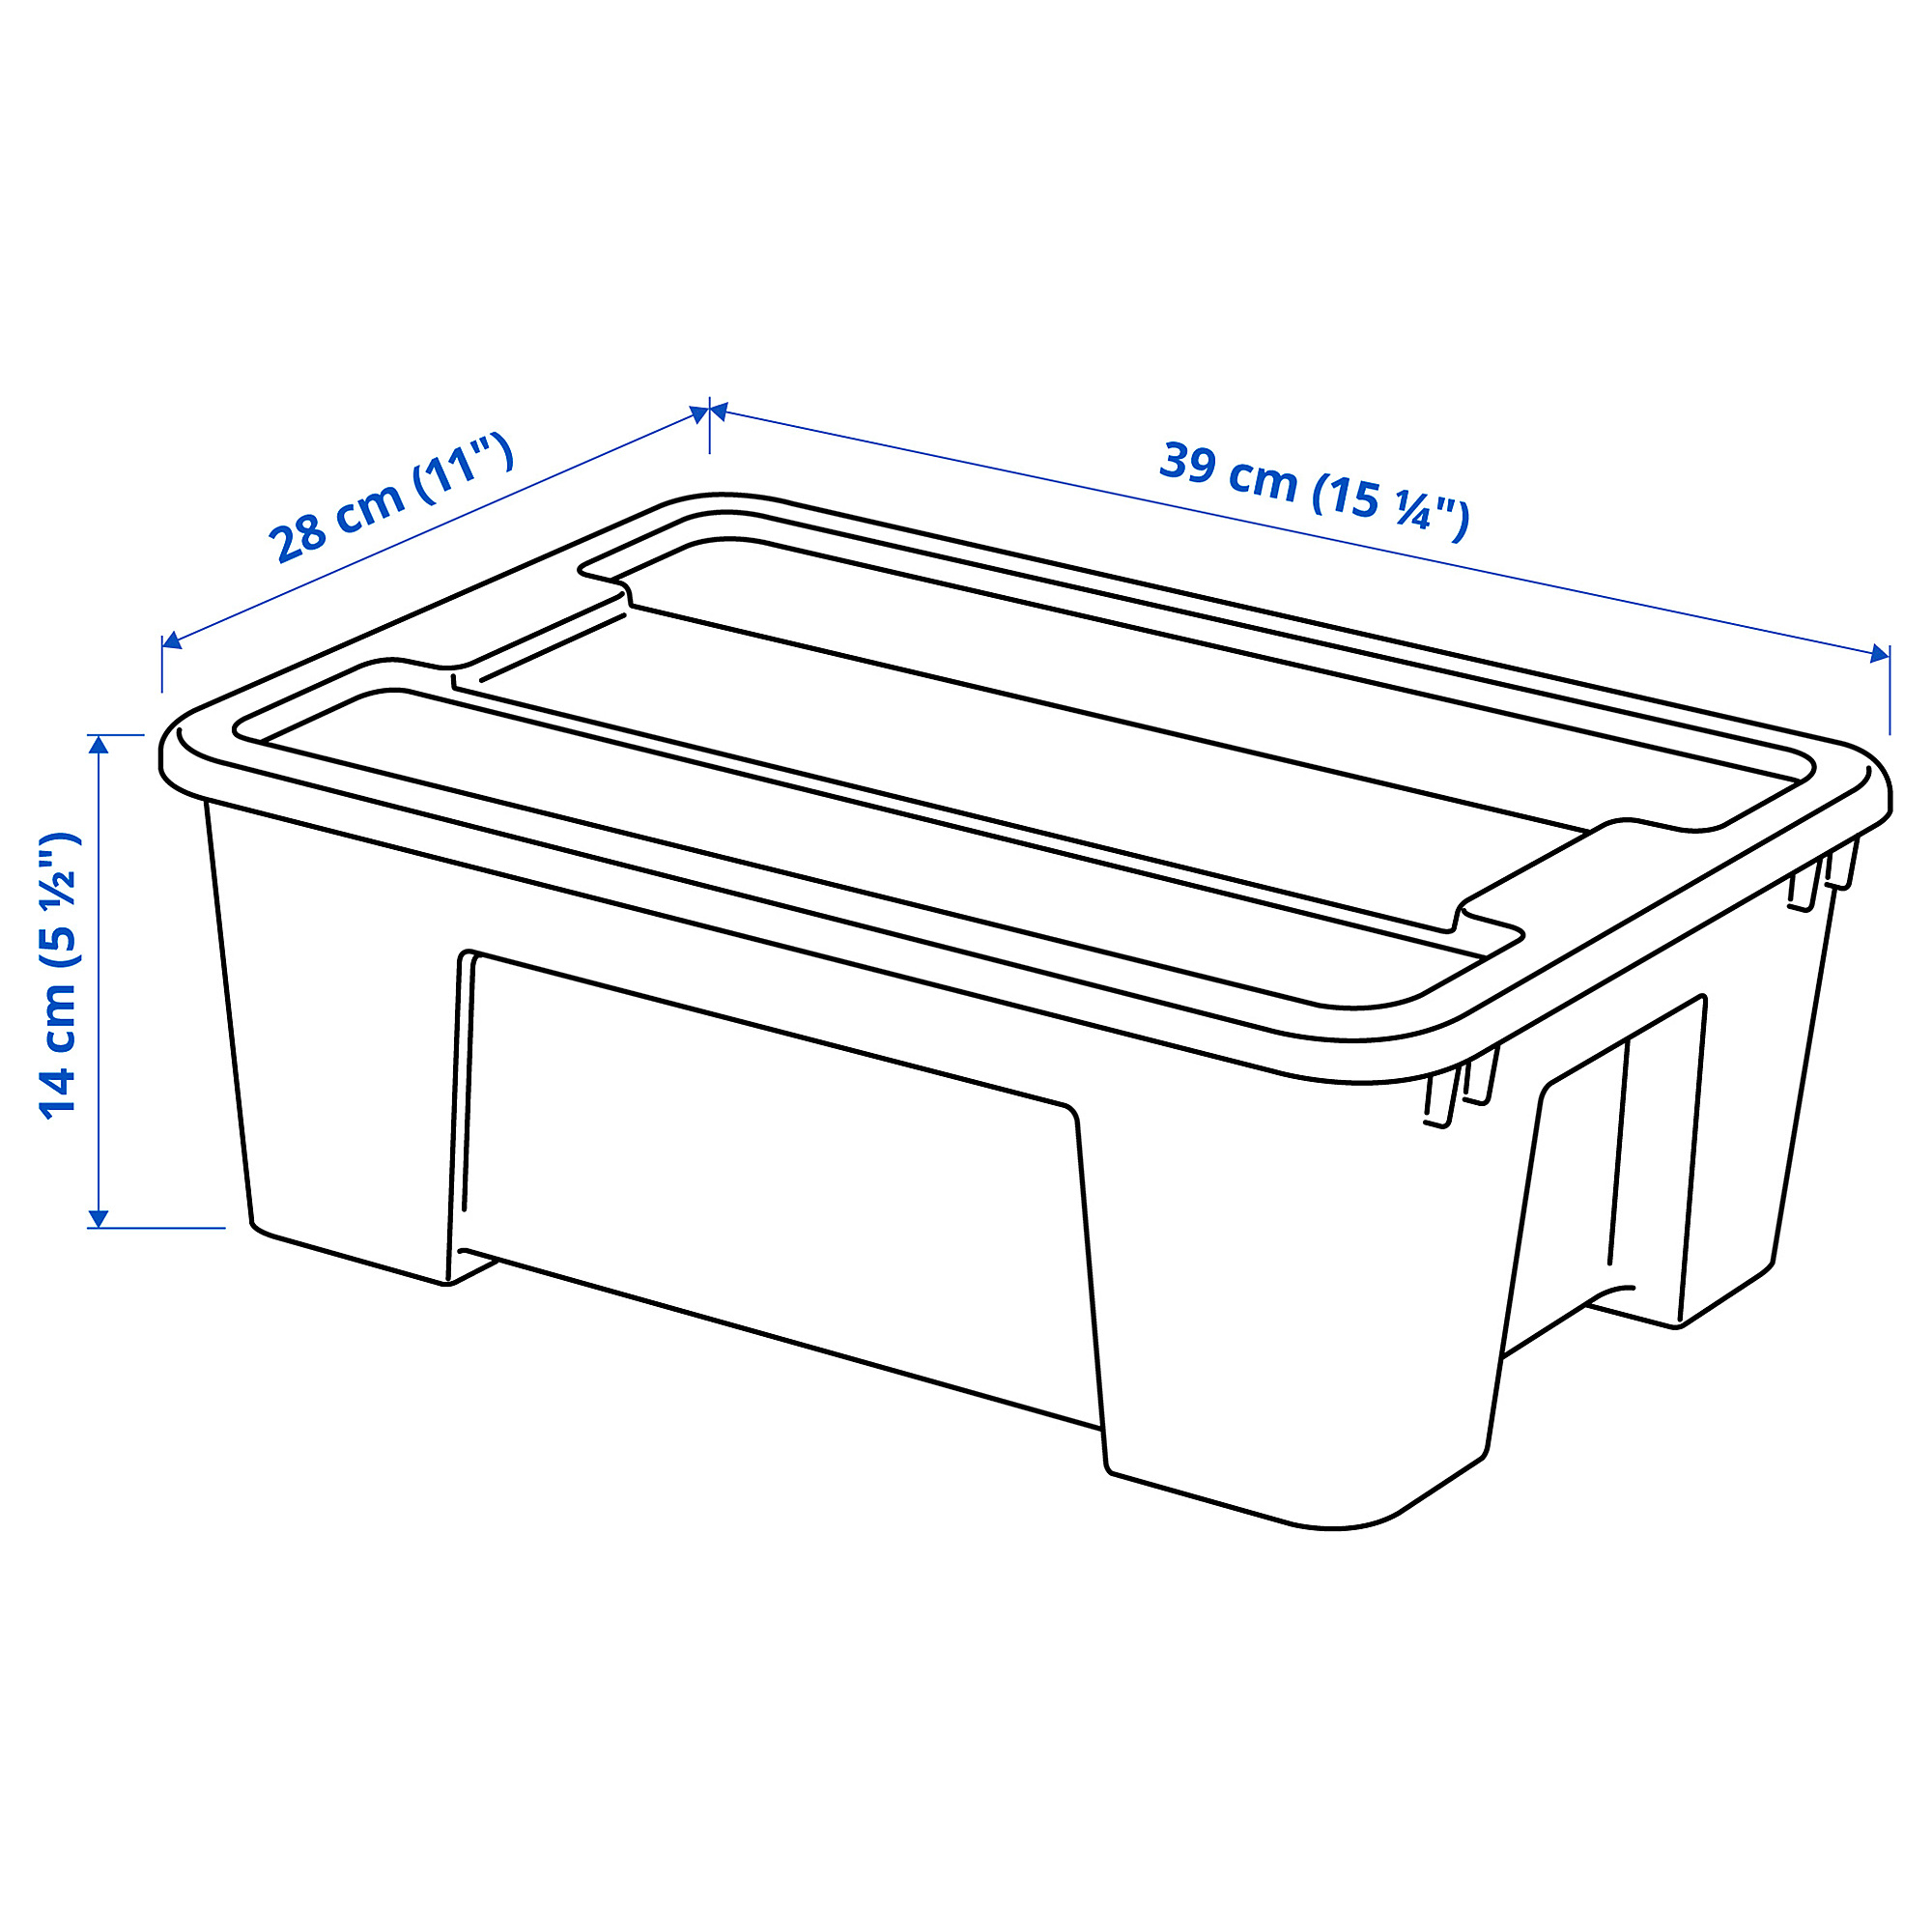 SAMLA box with lid